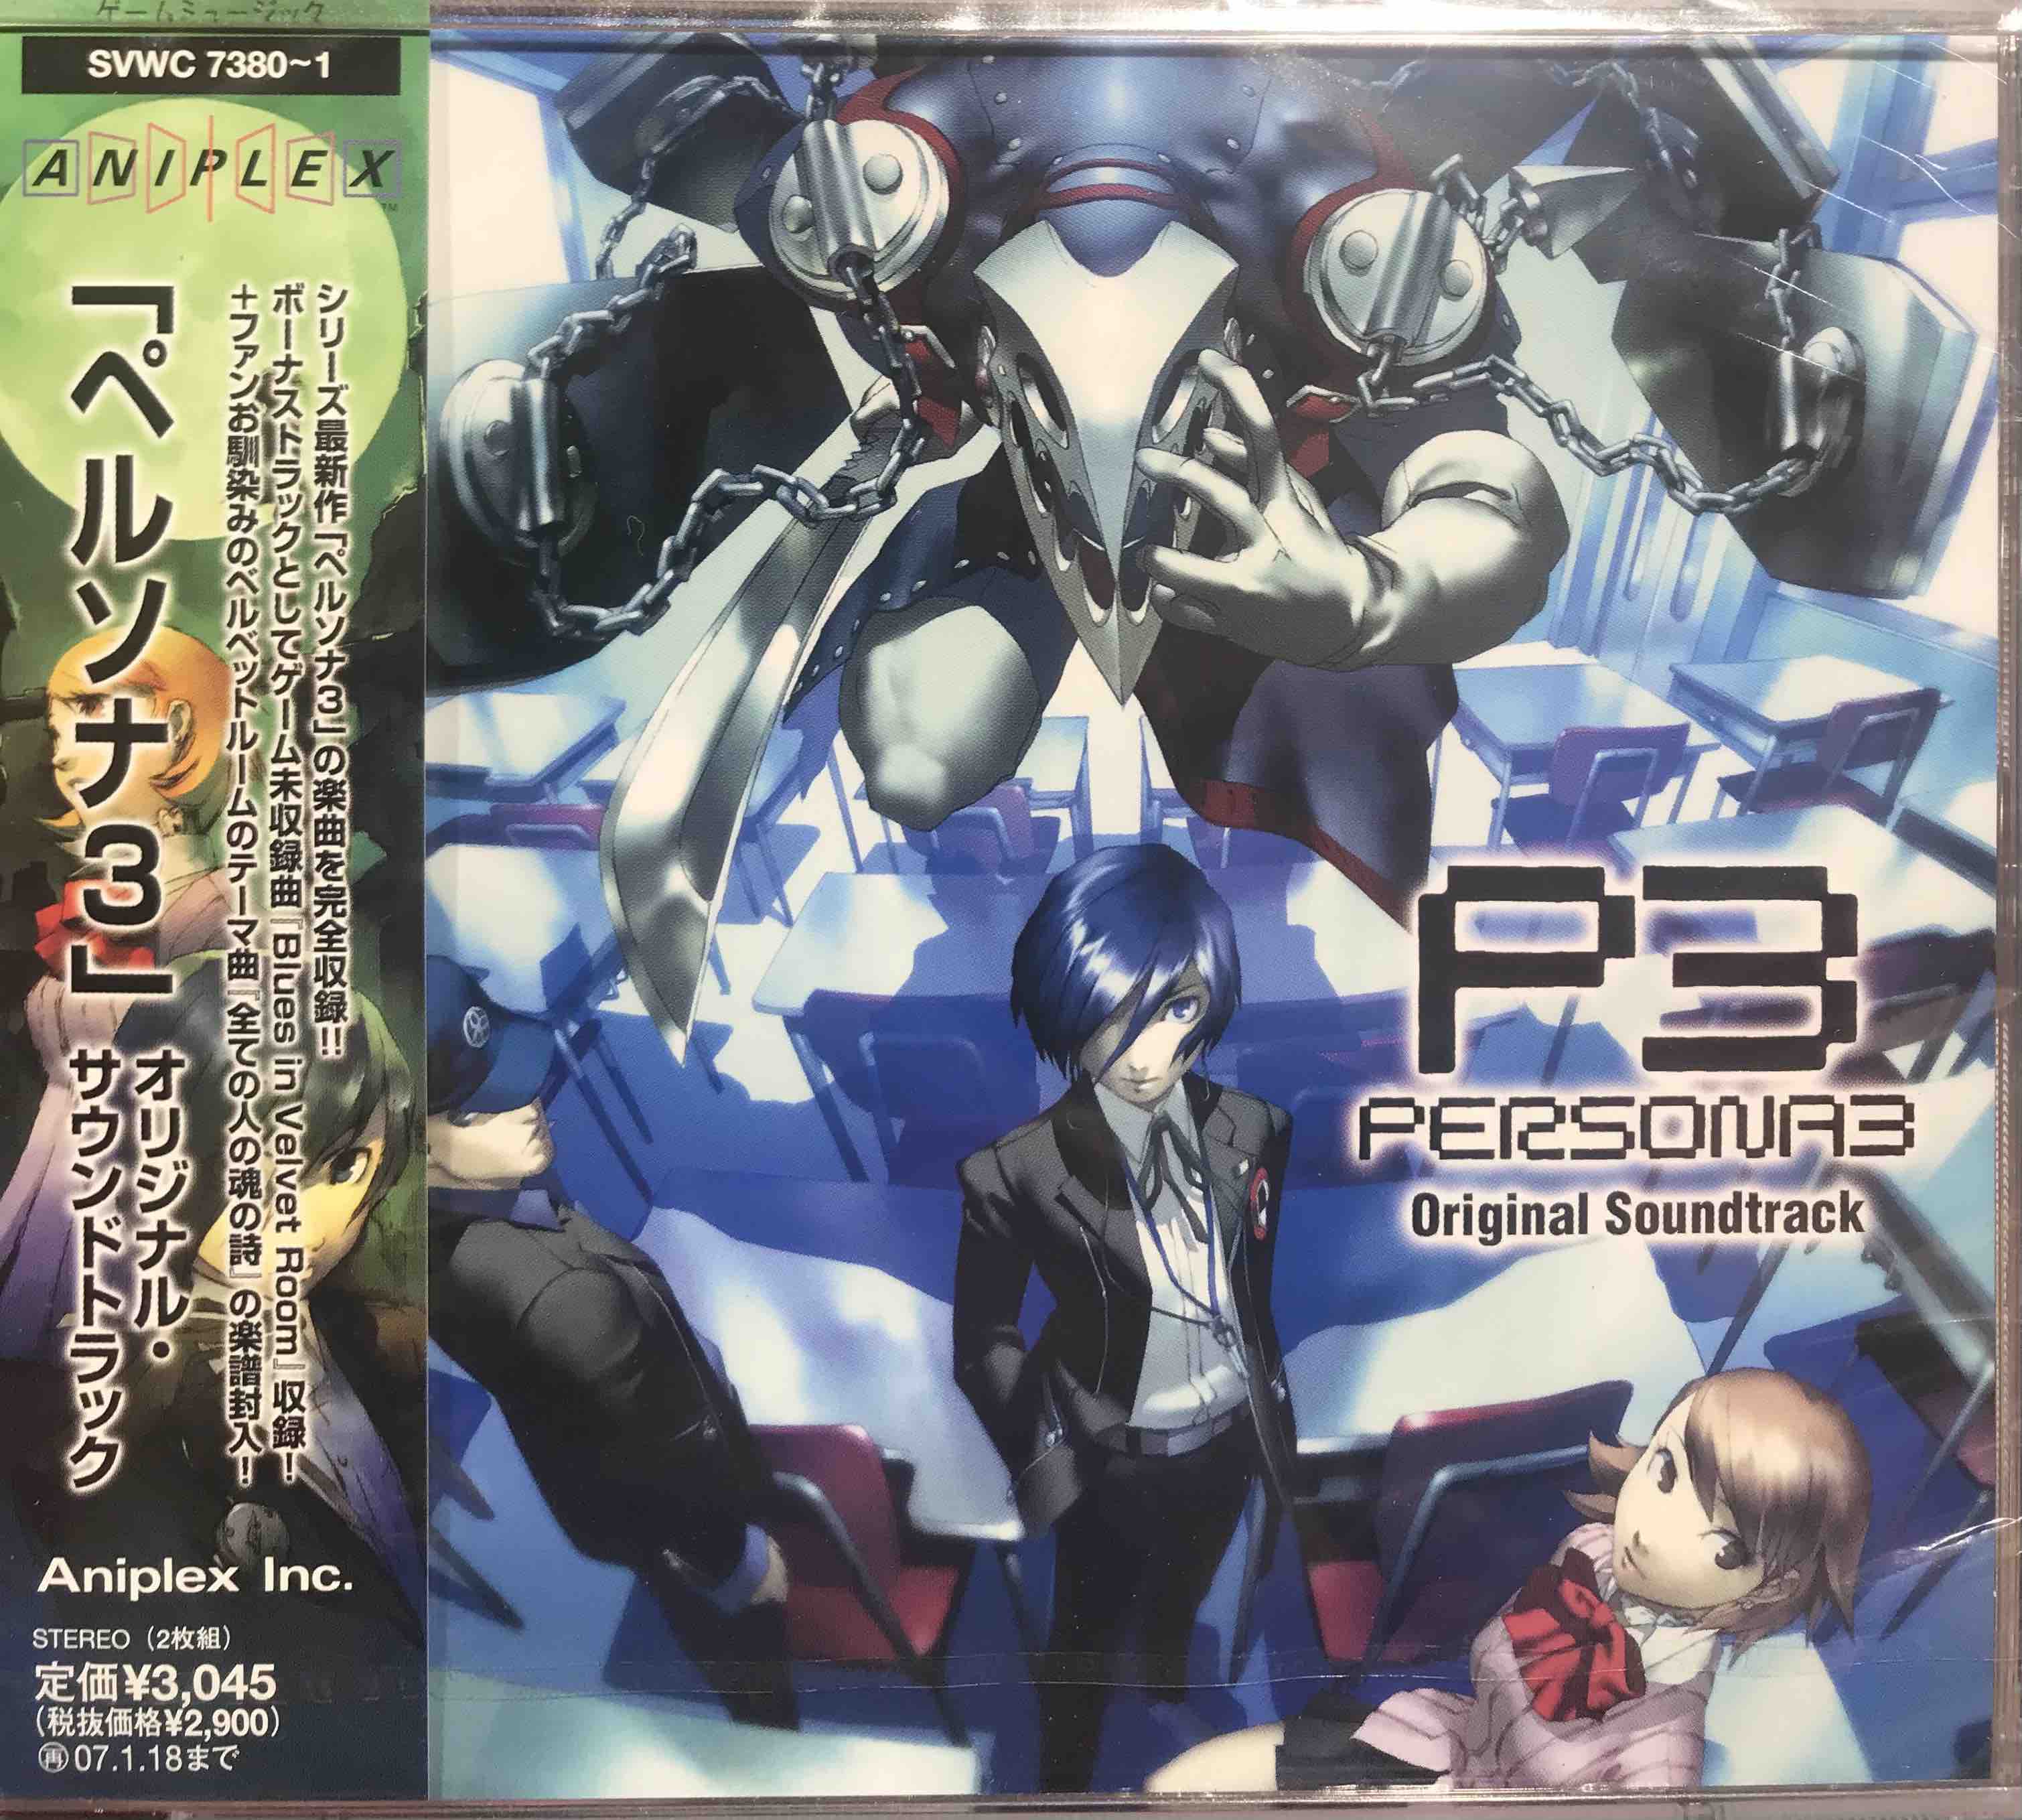 Shoji Meguro ‎– Persona3 Original Soundtrack